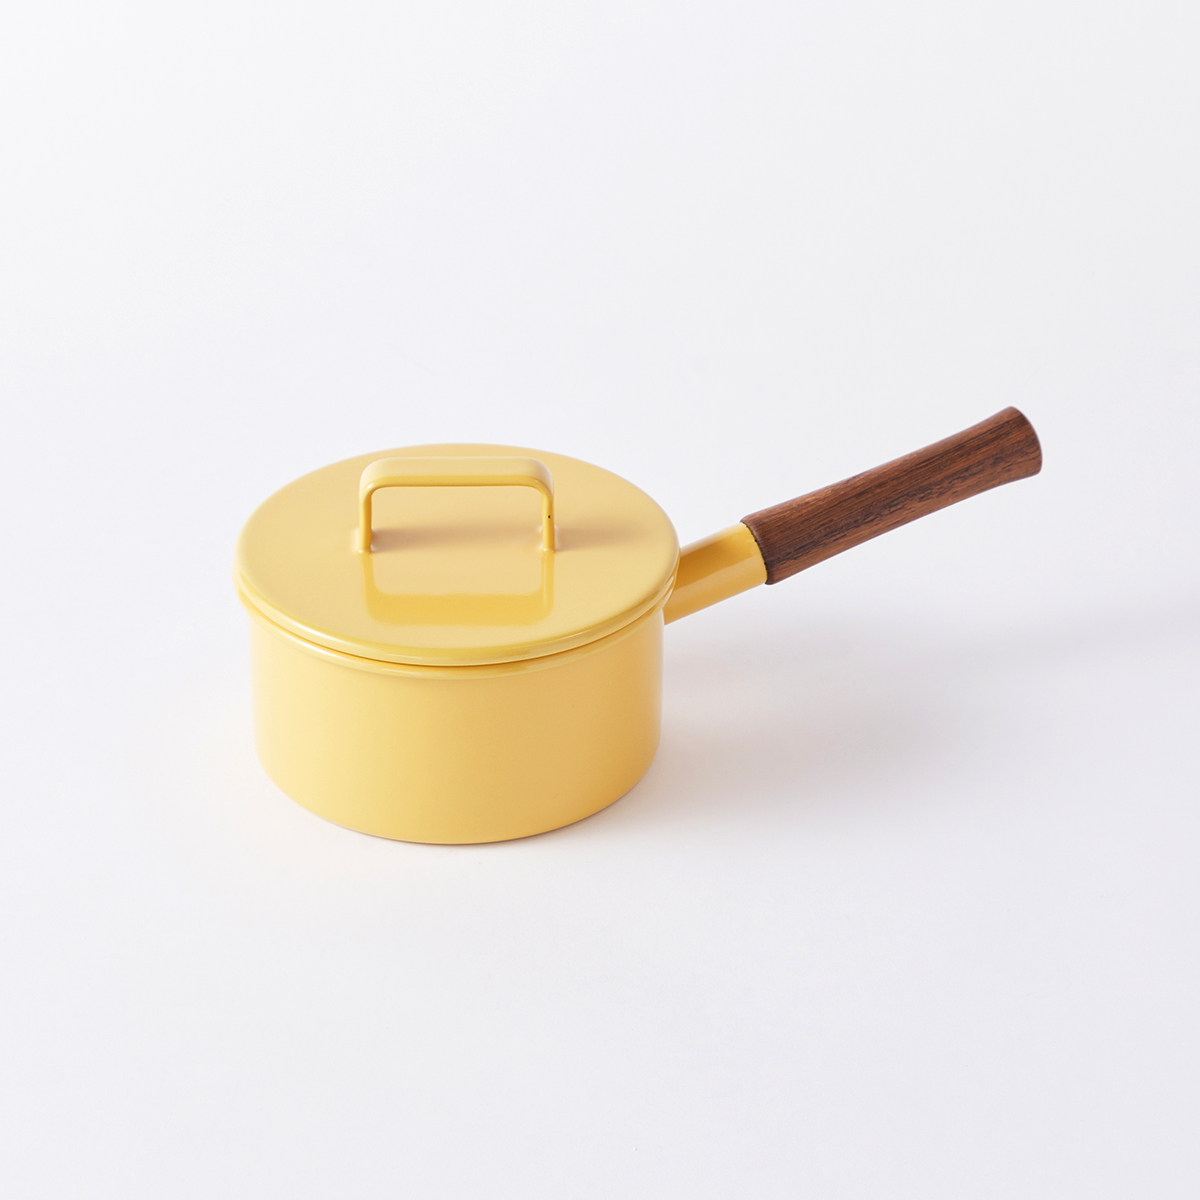 【365methods】ソースパン 16cm(黄色)